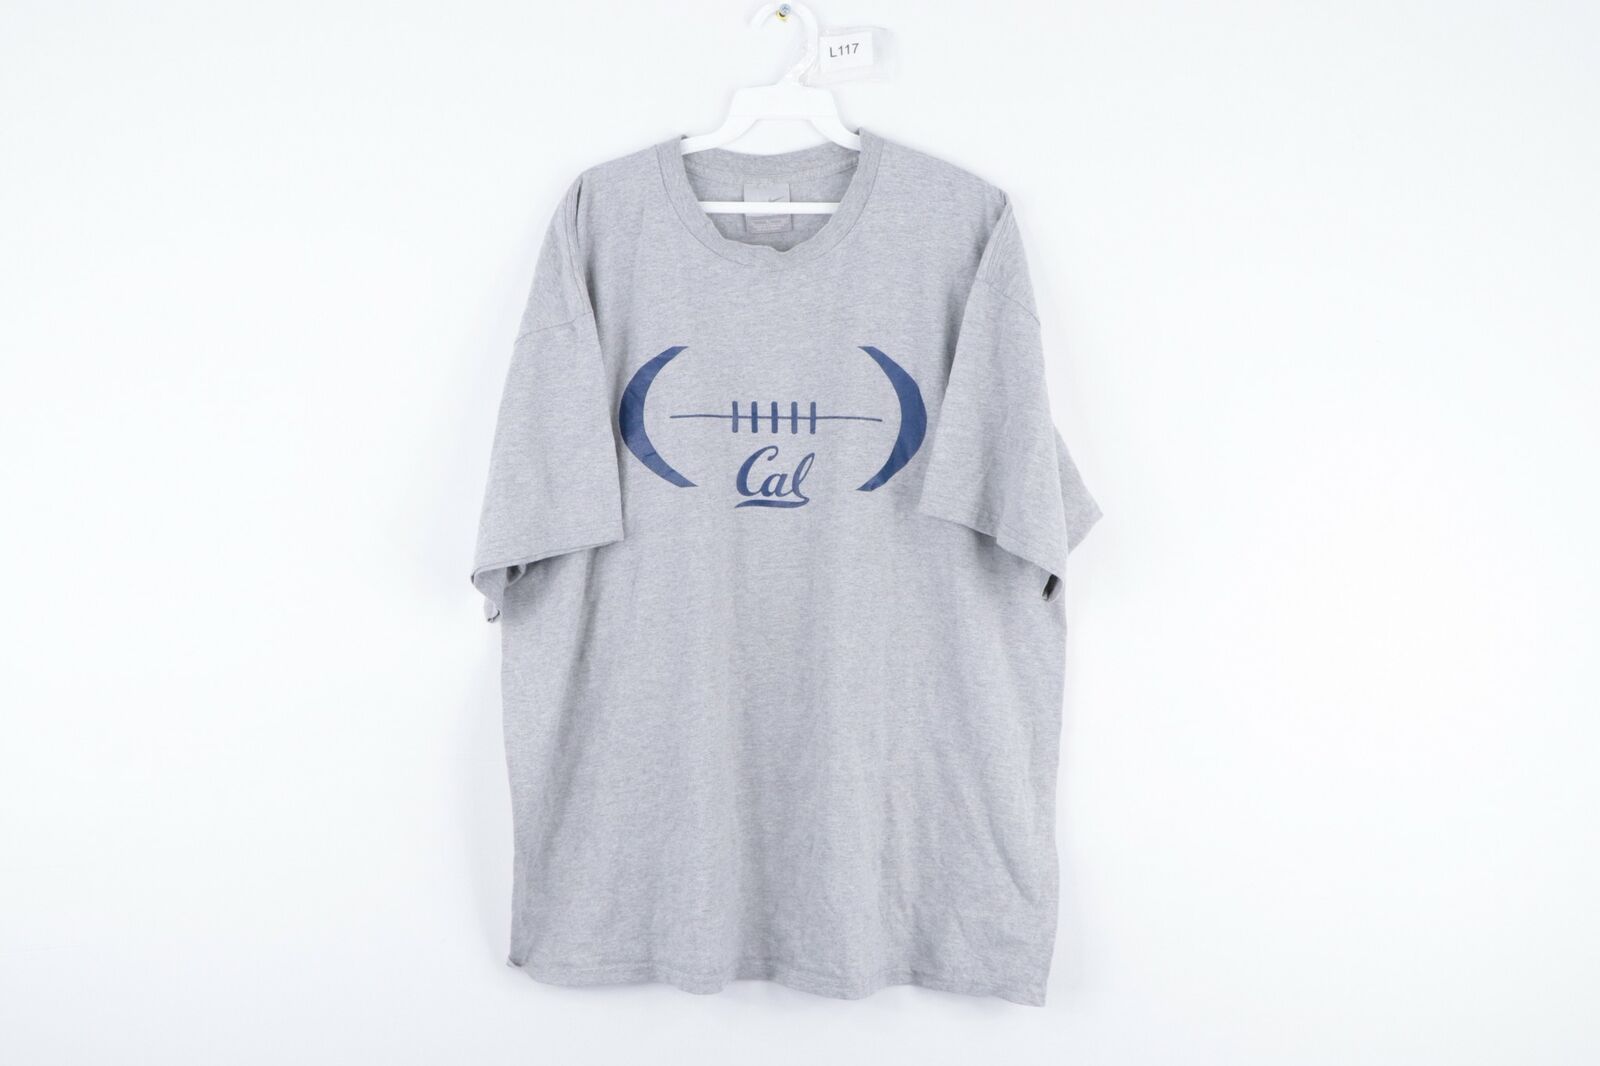 Nike Vintage Nike University of California Cal Football Shirt Size US XL / EU 56 / 4 - 1 Preview